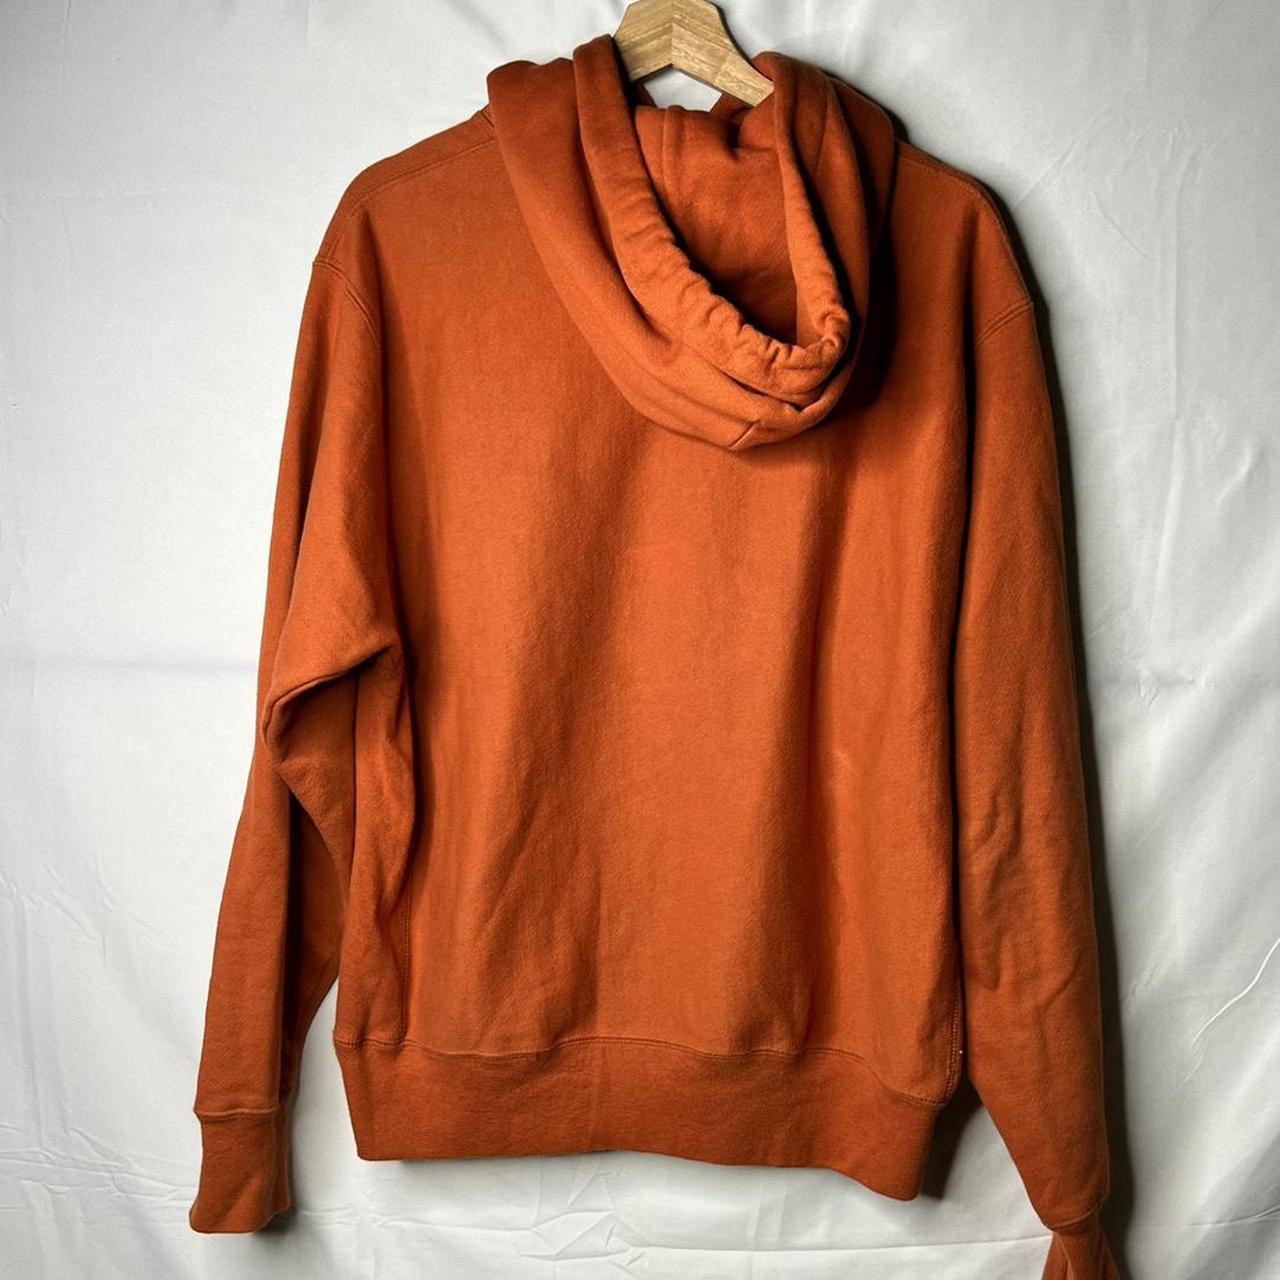 Product Image 3 - Orange Champion Reverse Weave Hoodie

Size